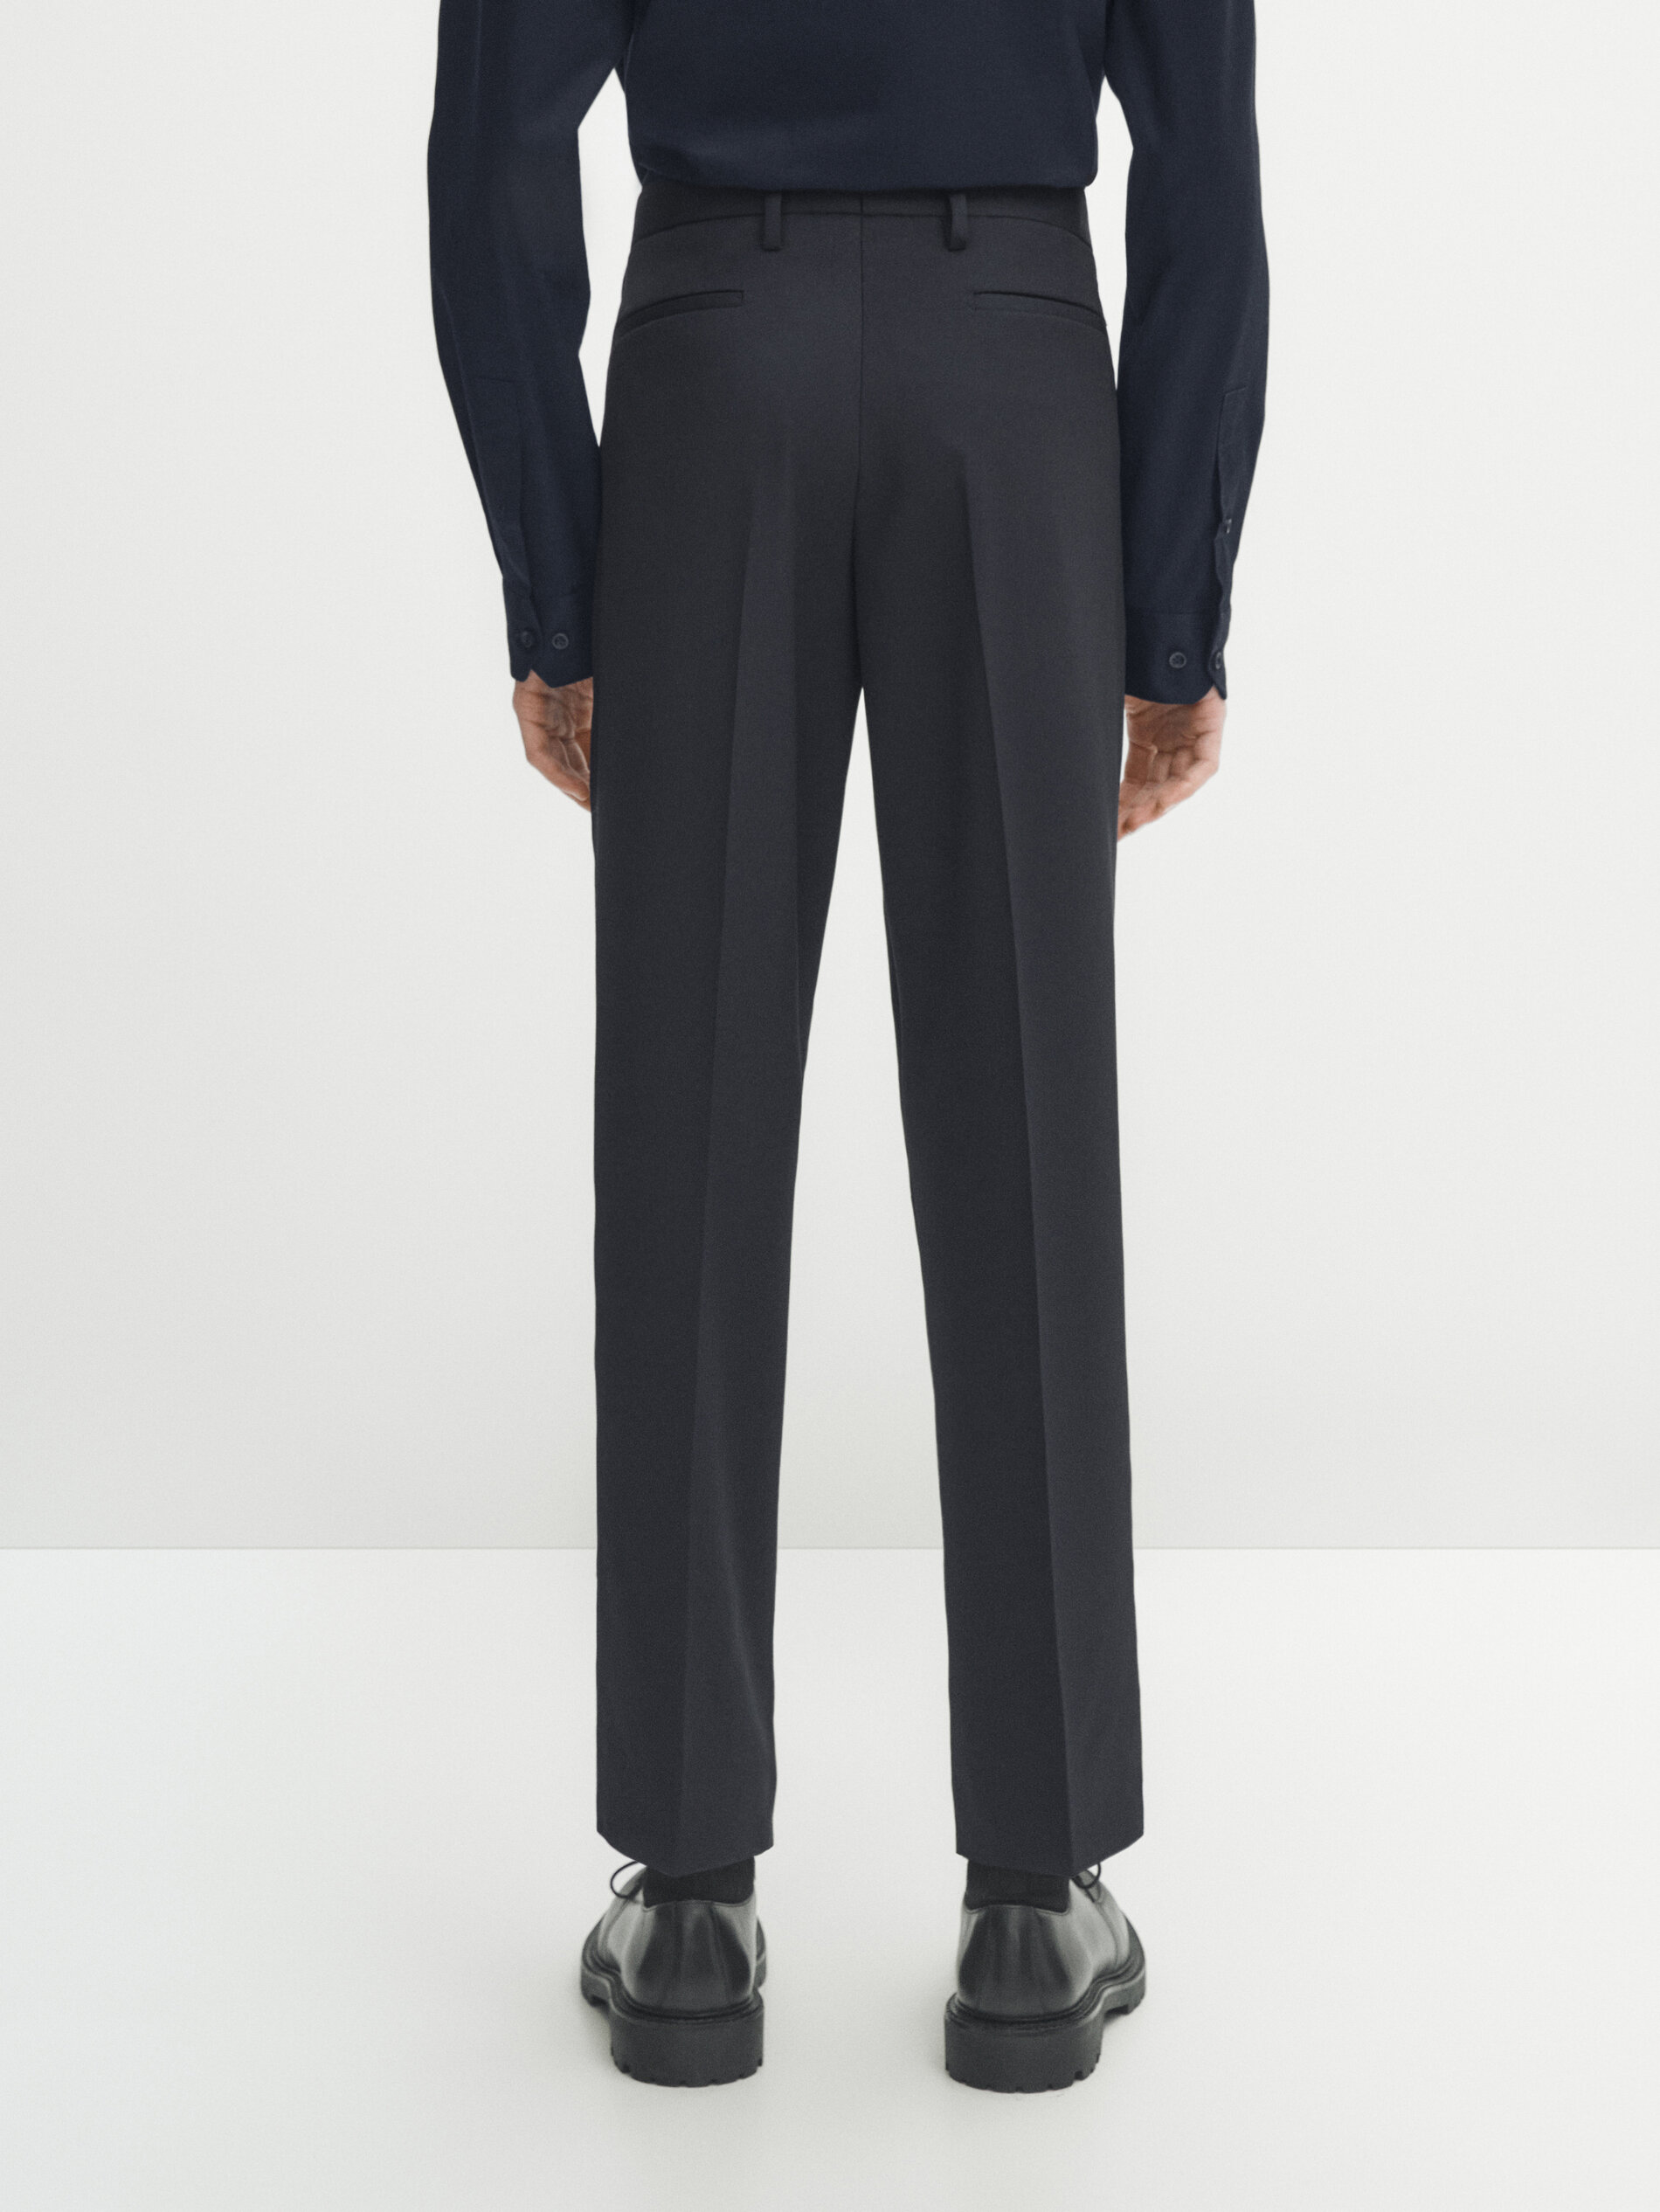 Lanificio A. Rodina Pants Mens Size 35 Milinea 100% Wool Trousers Italy  Made | eBay